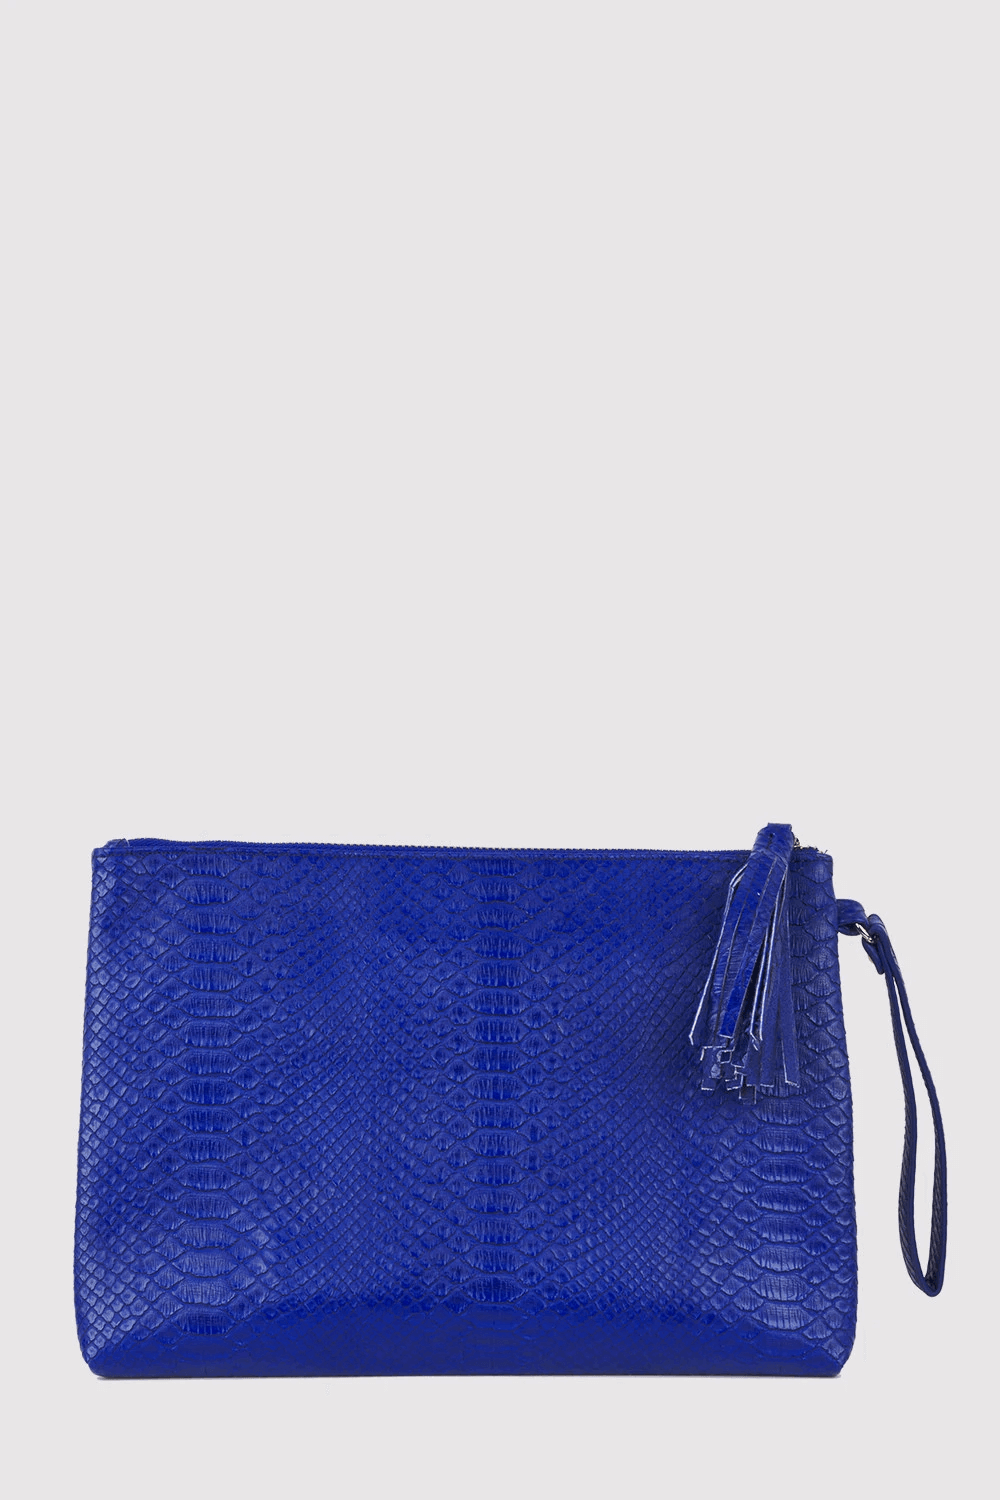 Americo Snake Print Wrist Strap Zipped Tassel Clutch Bag in Blue